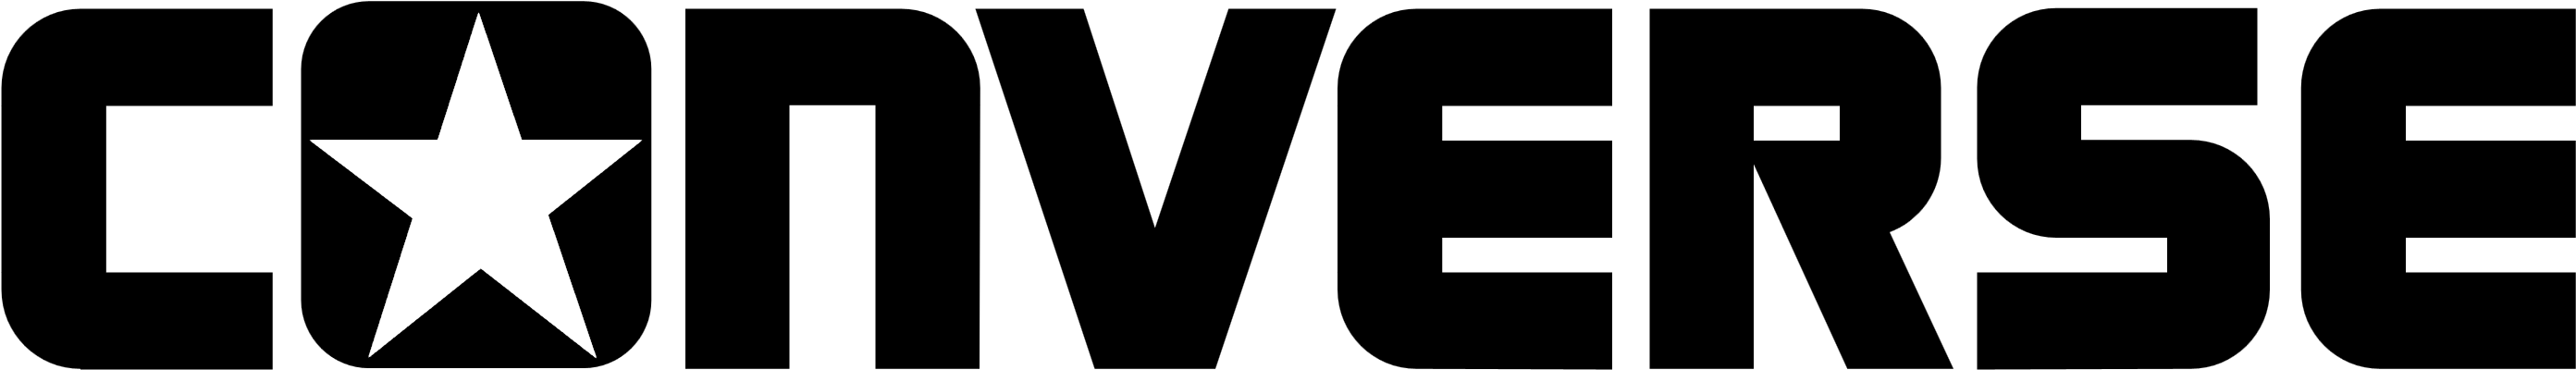 Converse Logo Transparent Free PNG